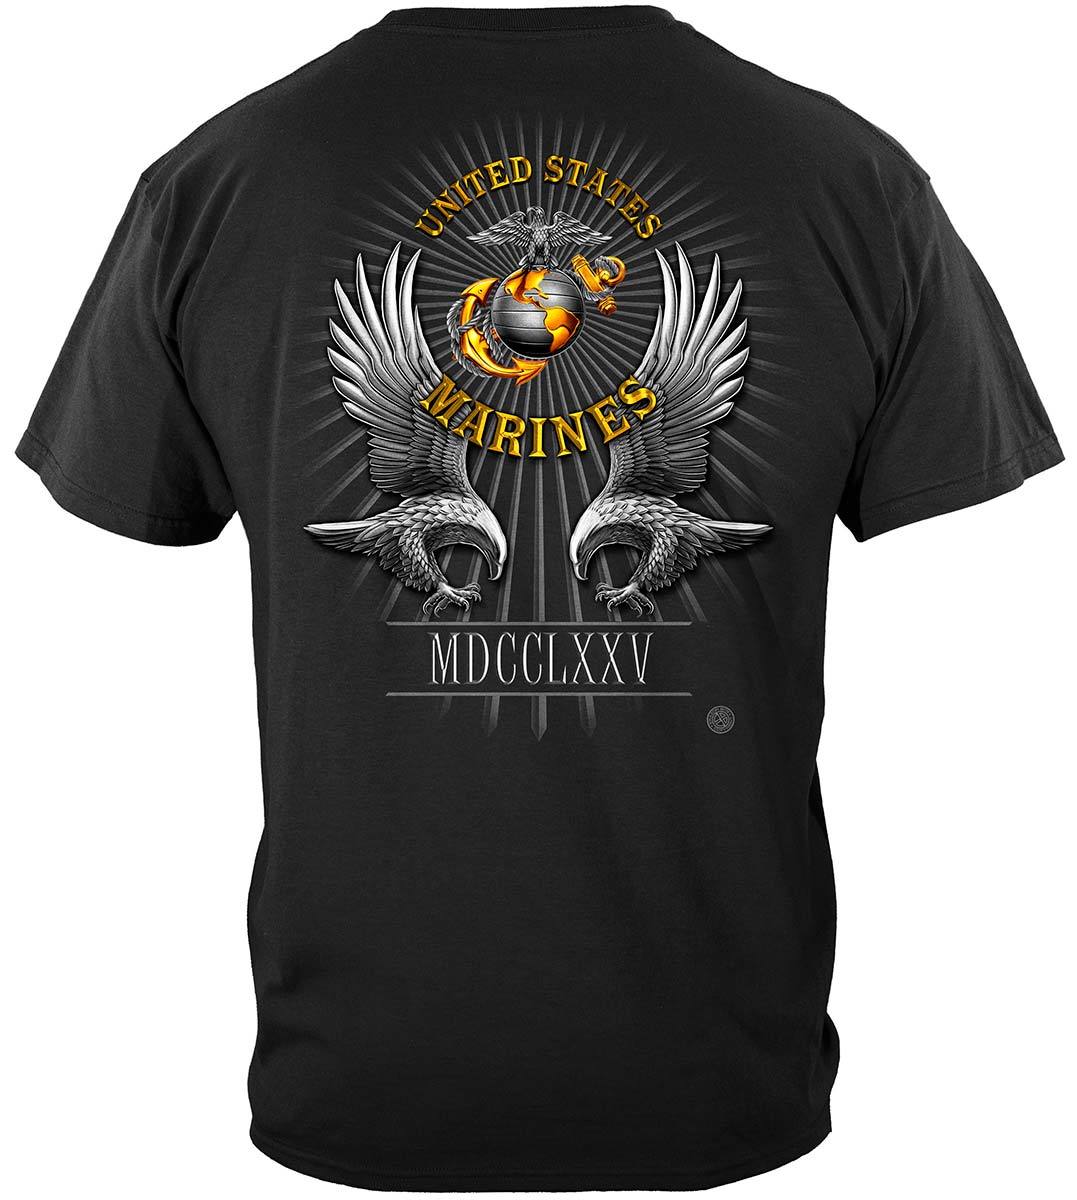 USMC Marine Corps Founded Date 1775 Premium T-Shirt